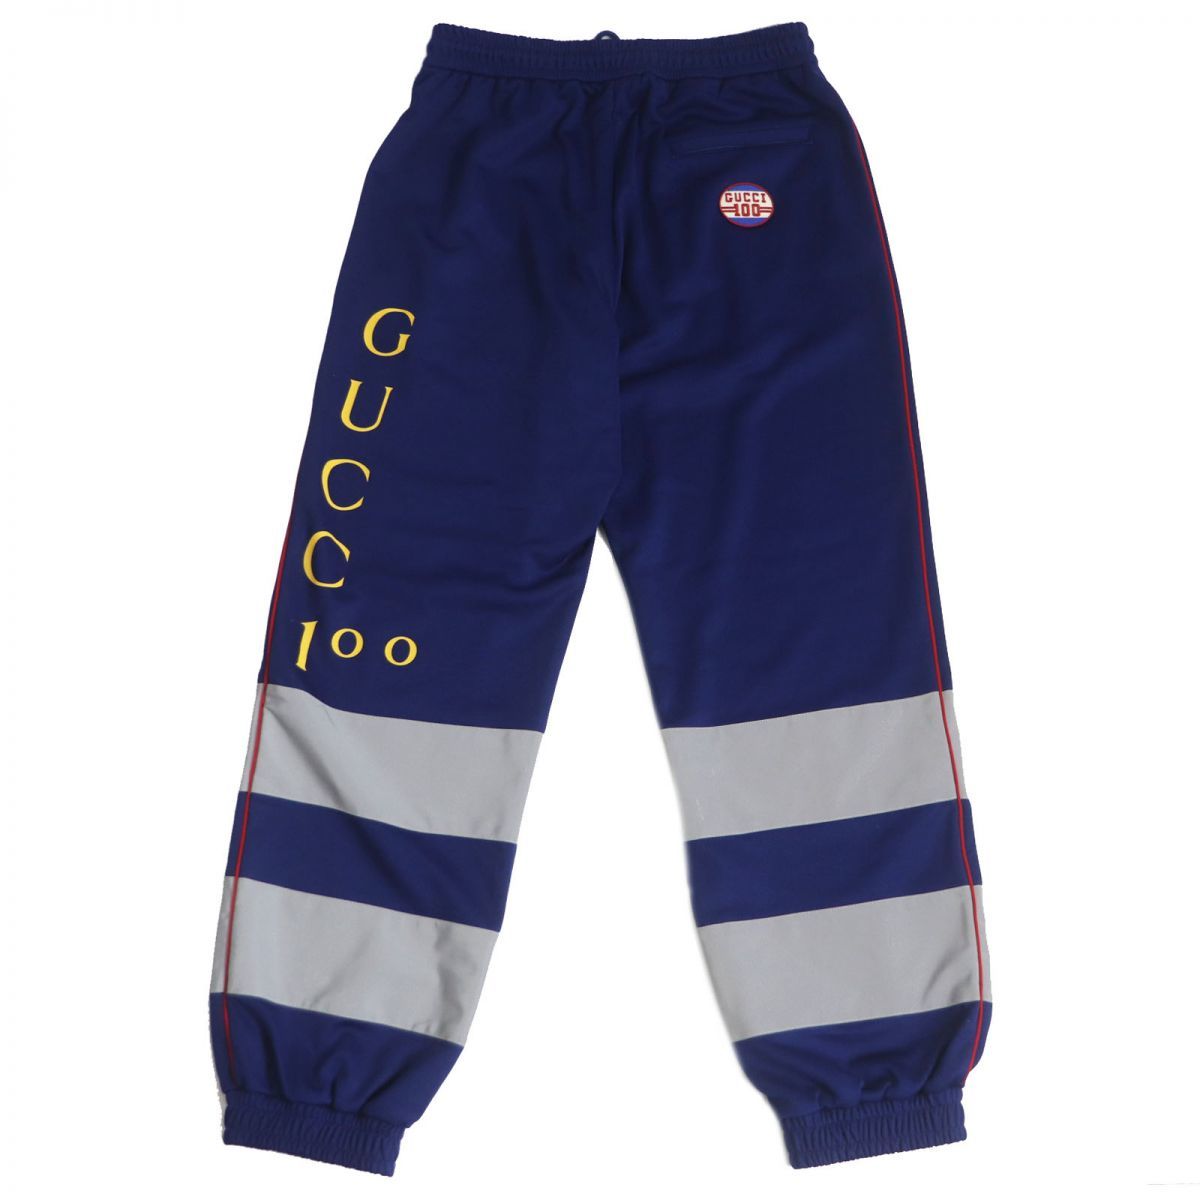  beautiful goods *22SS GUCCI/ Gucci 100 anniversary 676484 line design Logo badge truck pants / jogger pants blue M Italy made regular goods men's 